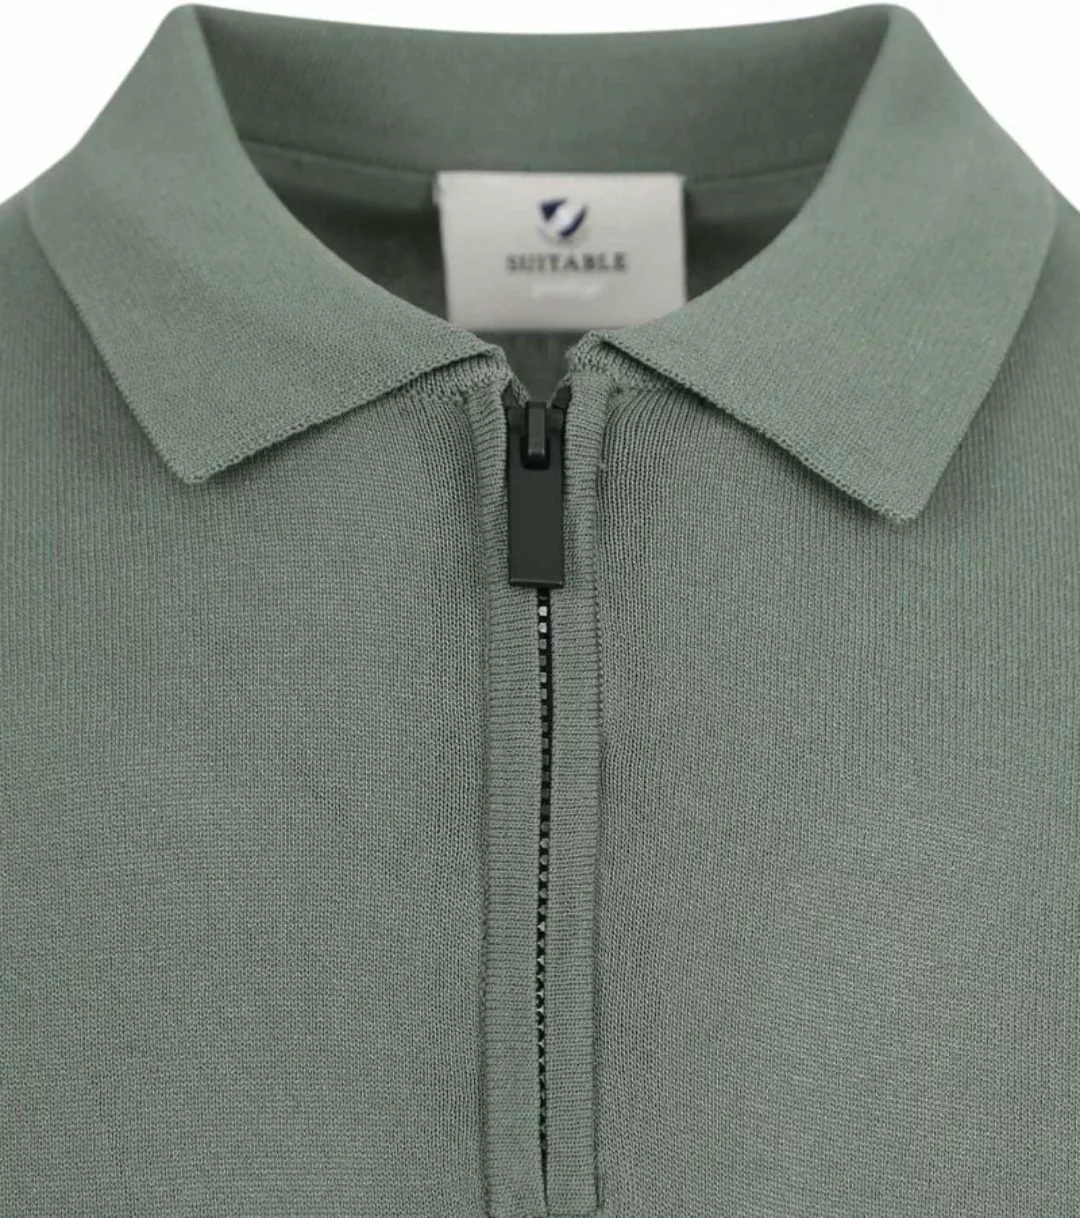 Suitable Cool Dry Knit Poloshirt Grün - Größe L günstig online kaufen